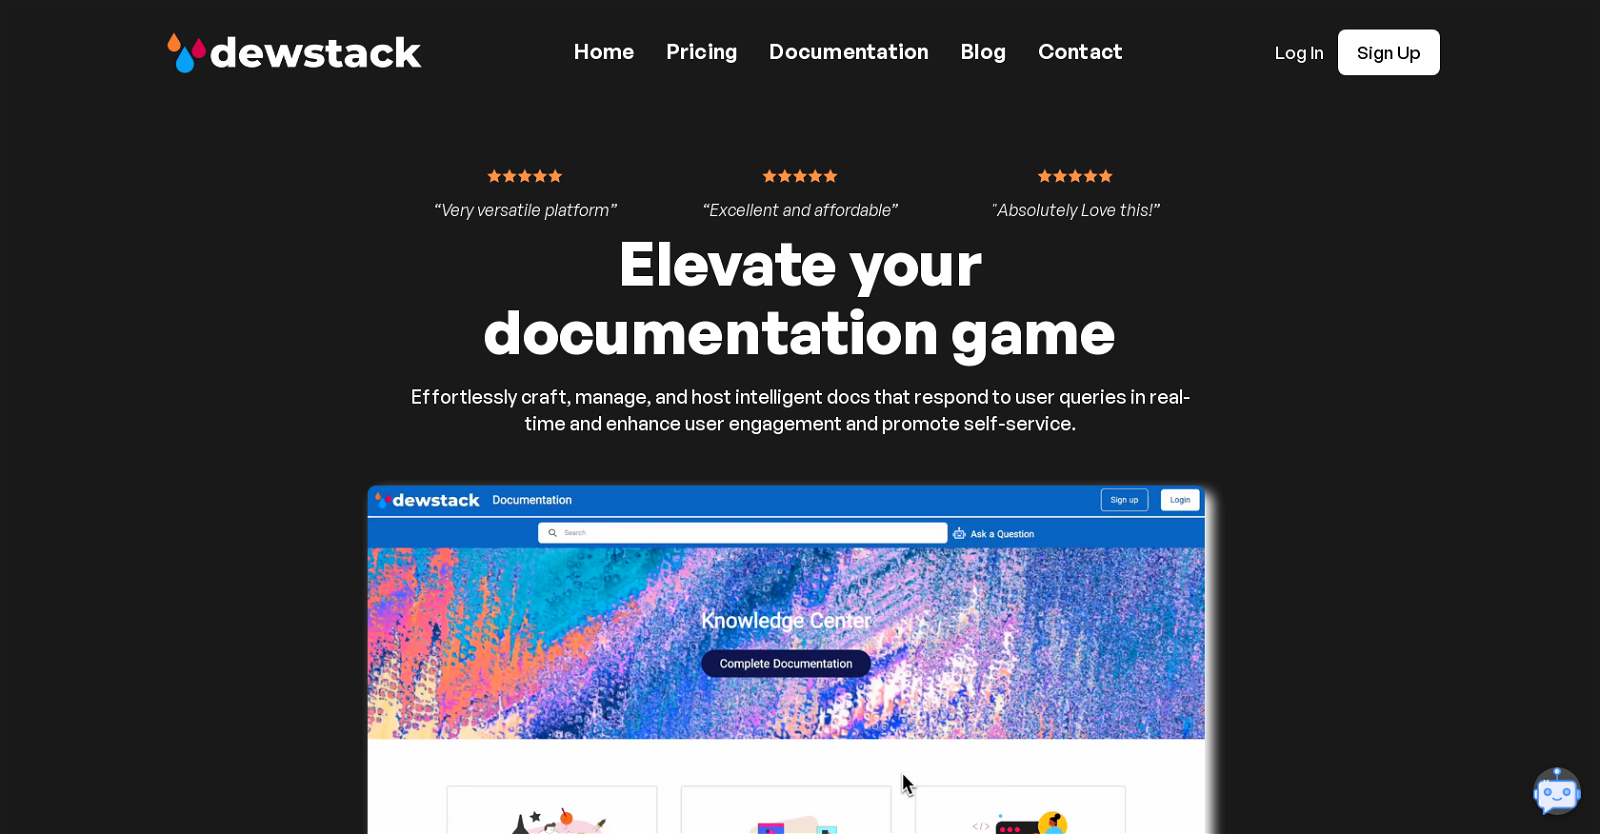 Dewstack website